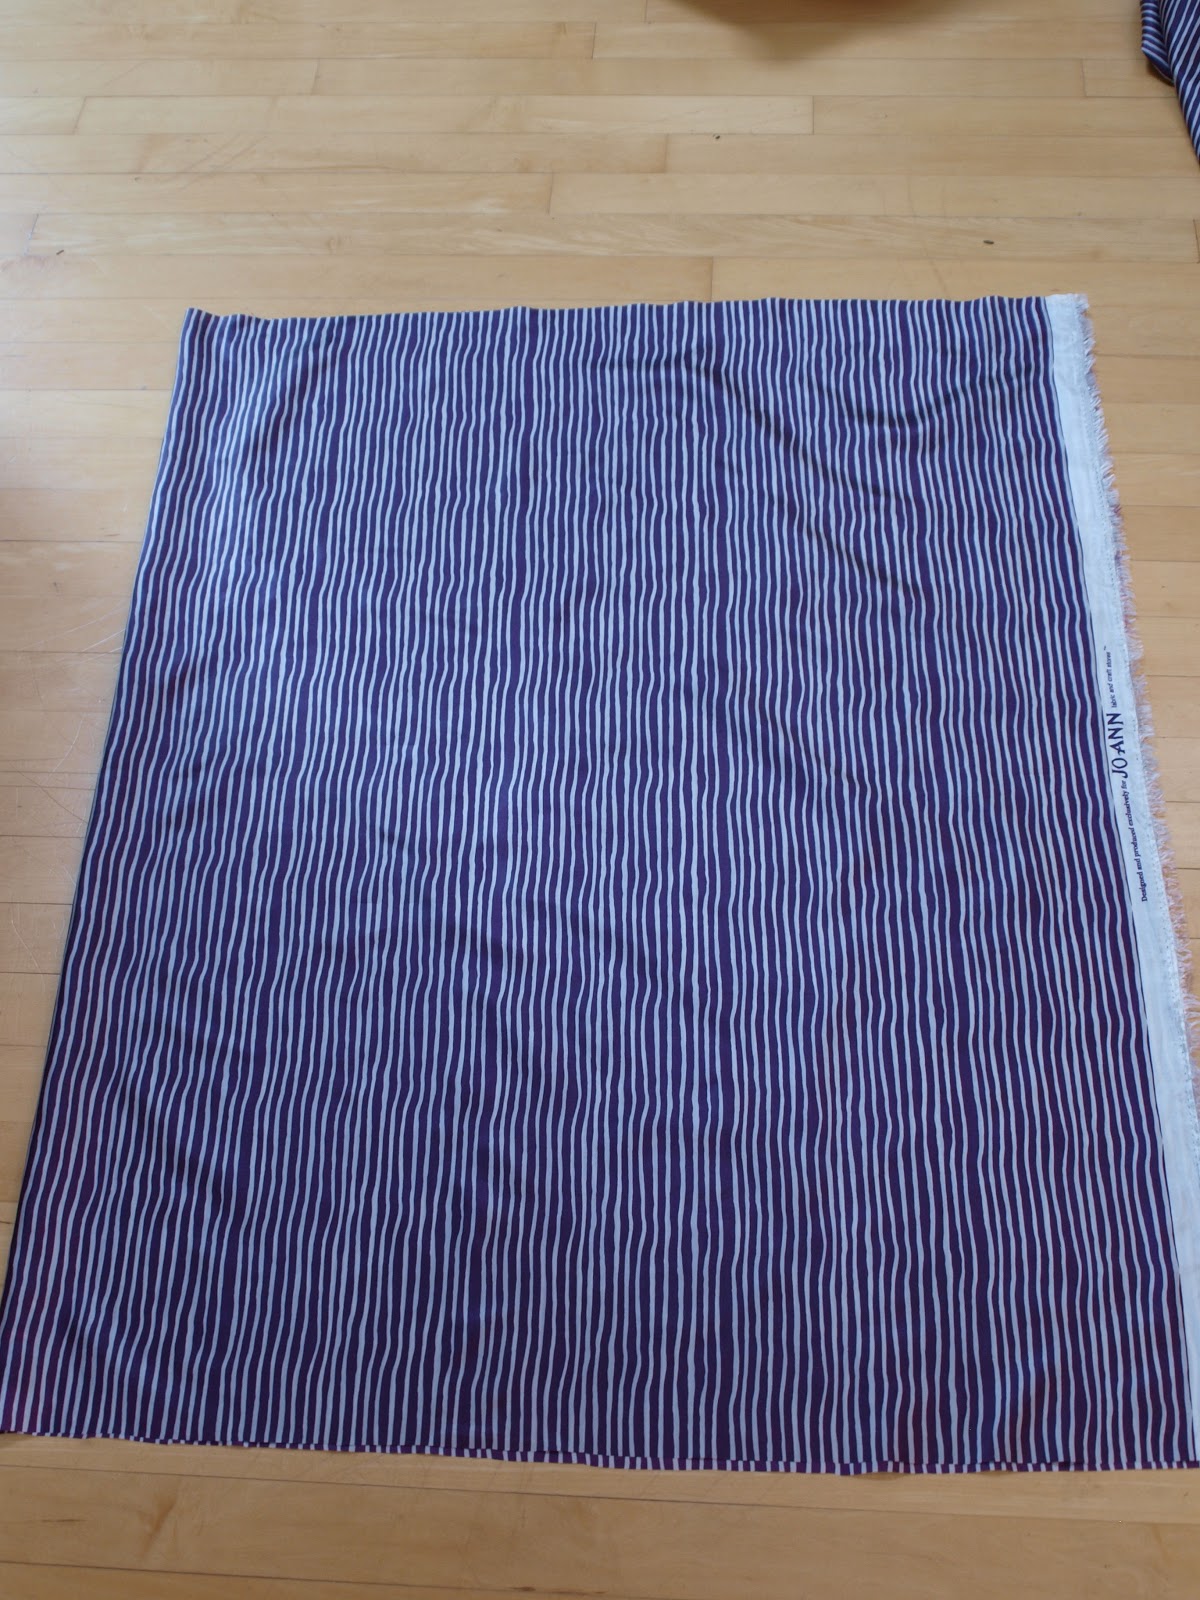 Elemental Carbon: Very Gathered Skirt // DIY